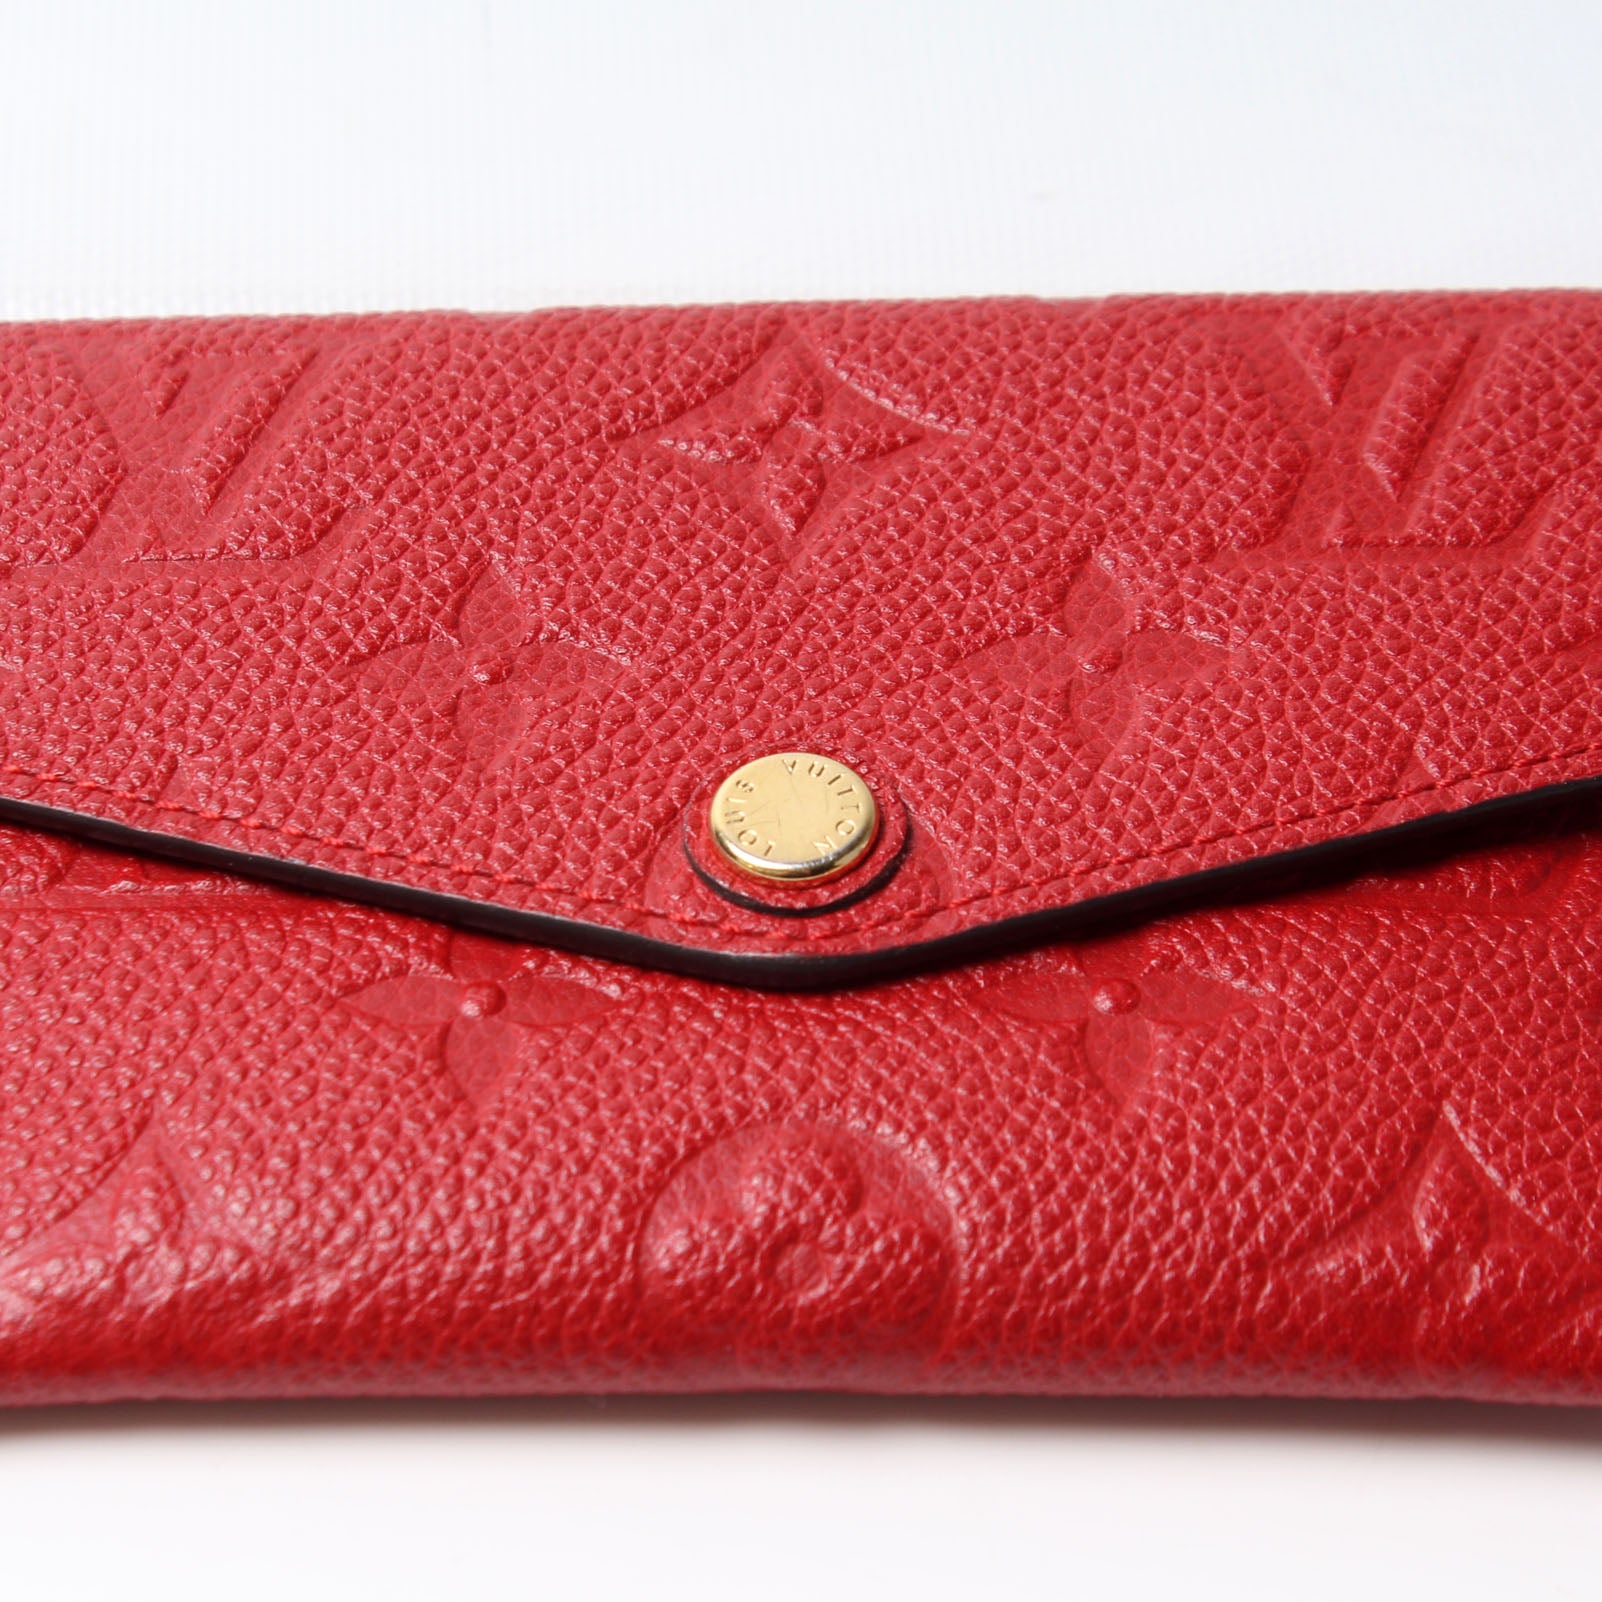 Key Pouch Empreinte – Keeks Designer Handbags